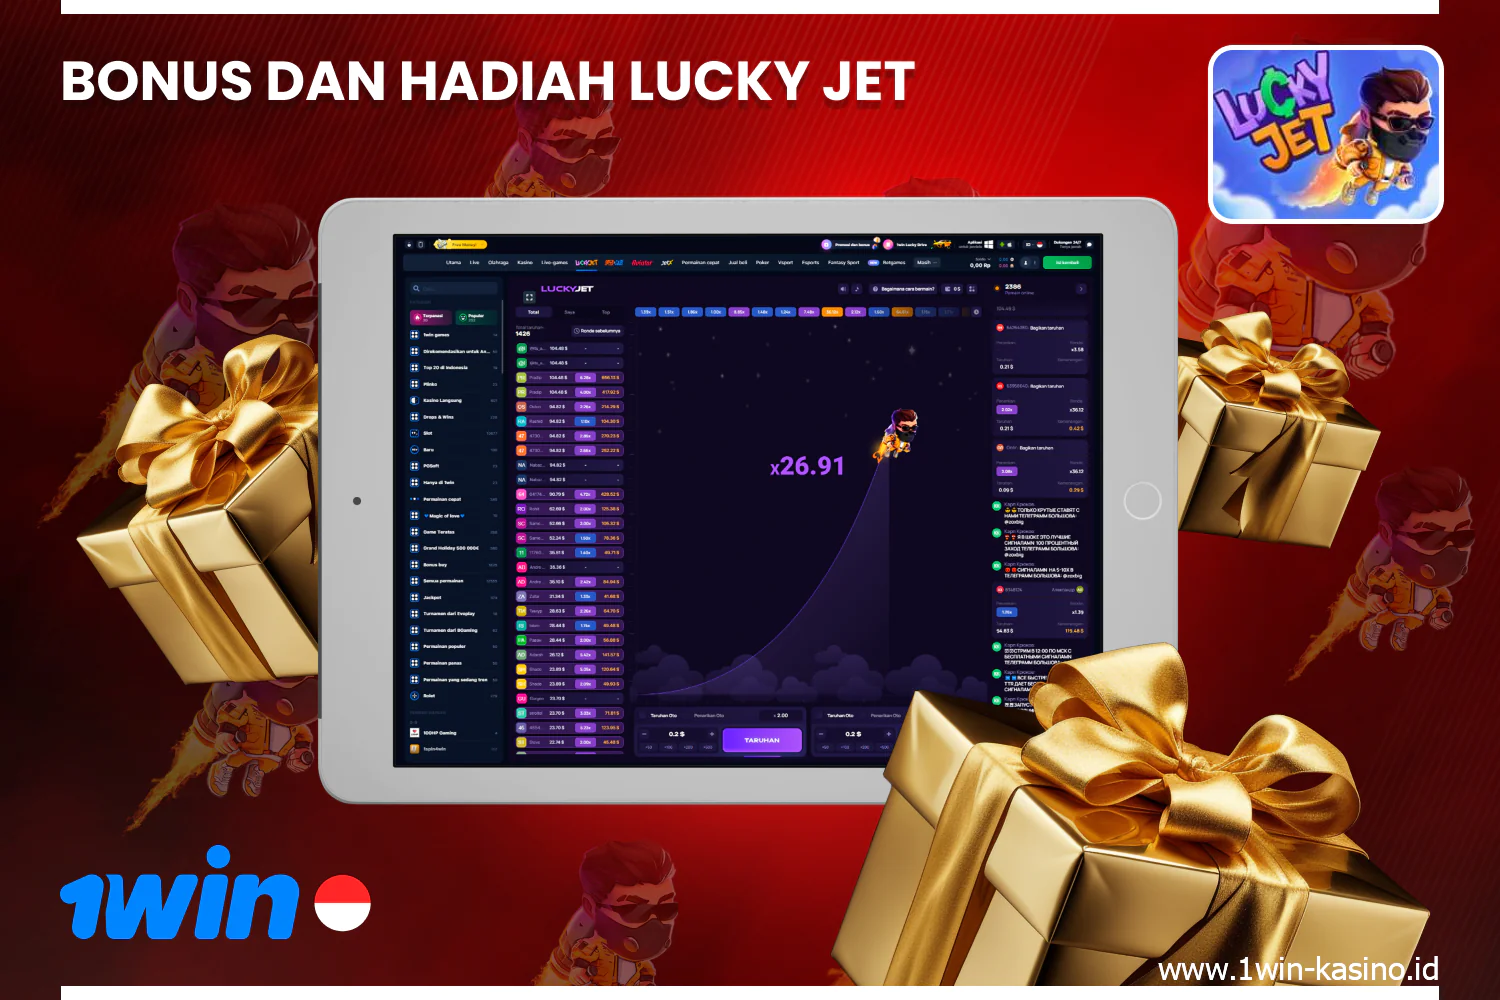 Pemain Indonesia dapat menggunakan bonus untuk memainkan 1 win Lucky Jet